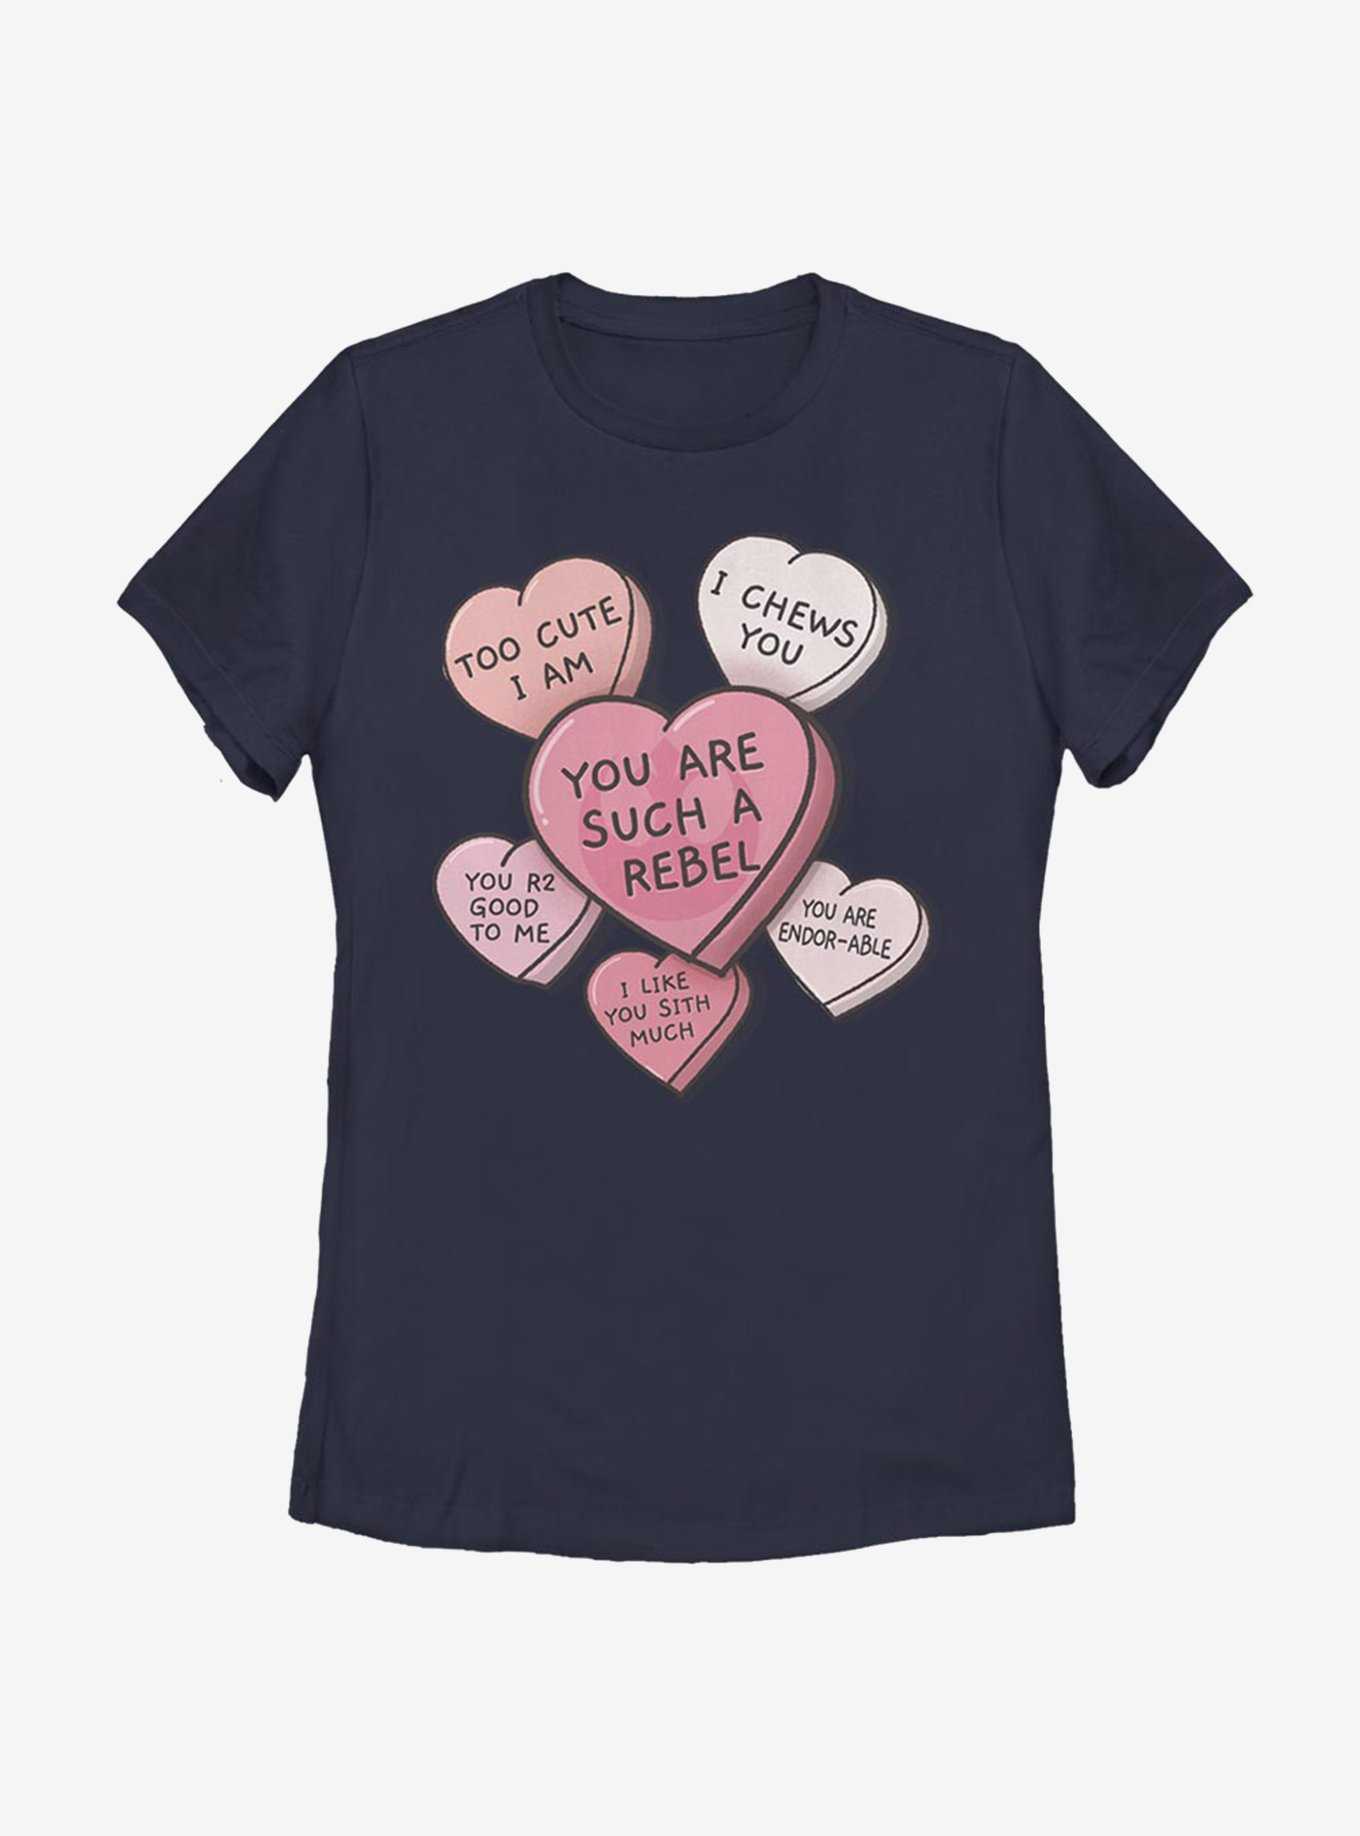 Star Wars Candy Hearts Womens T-Shirt, , hi-res